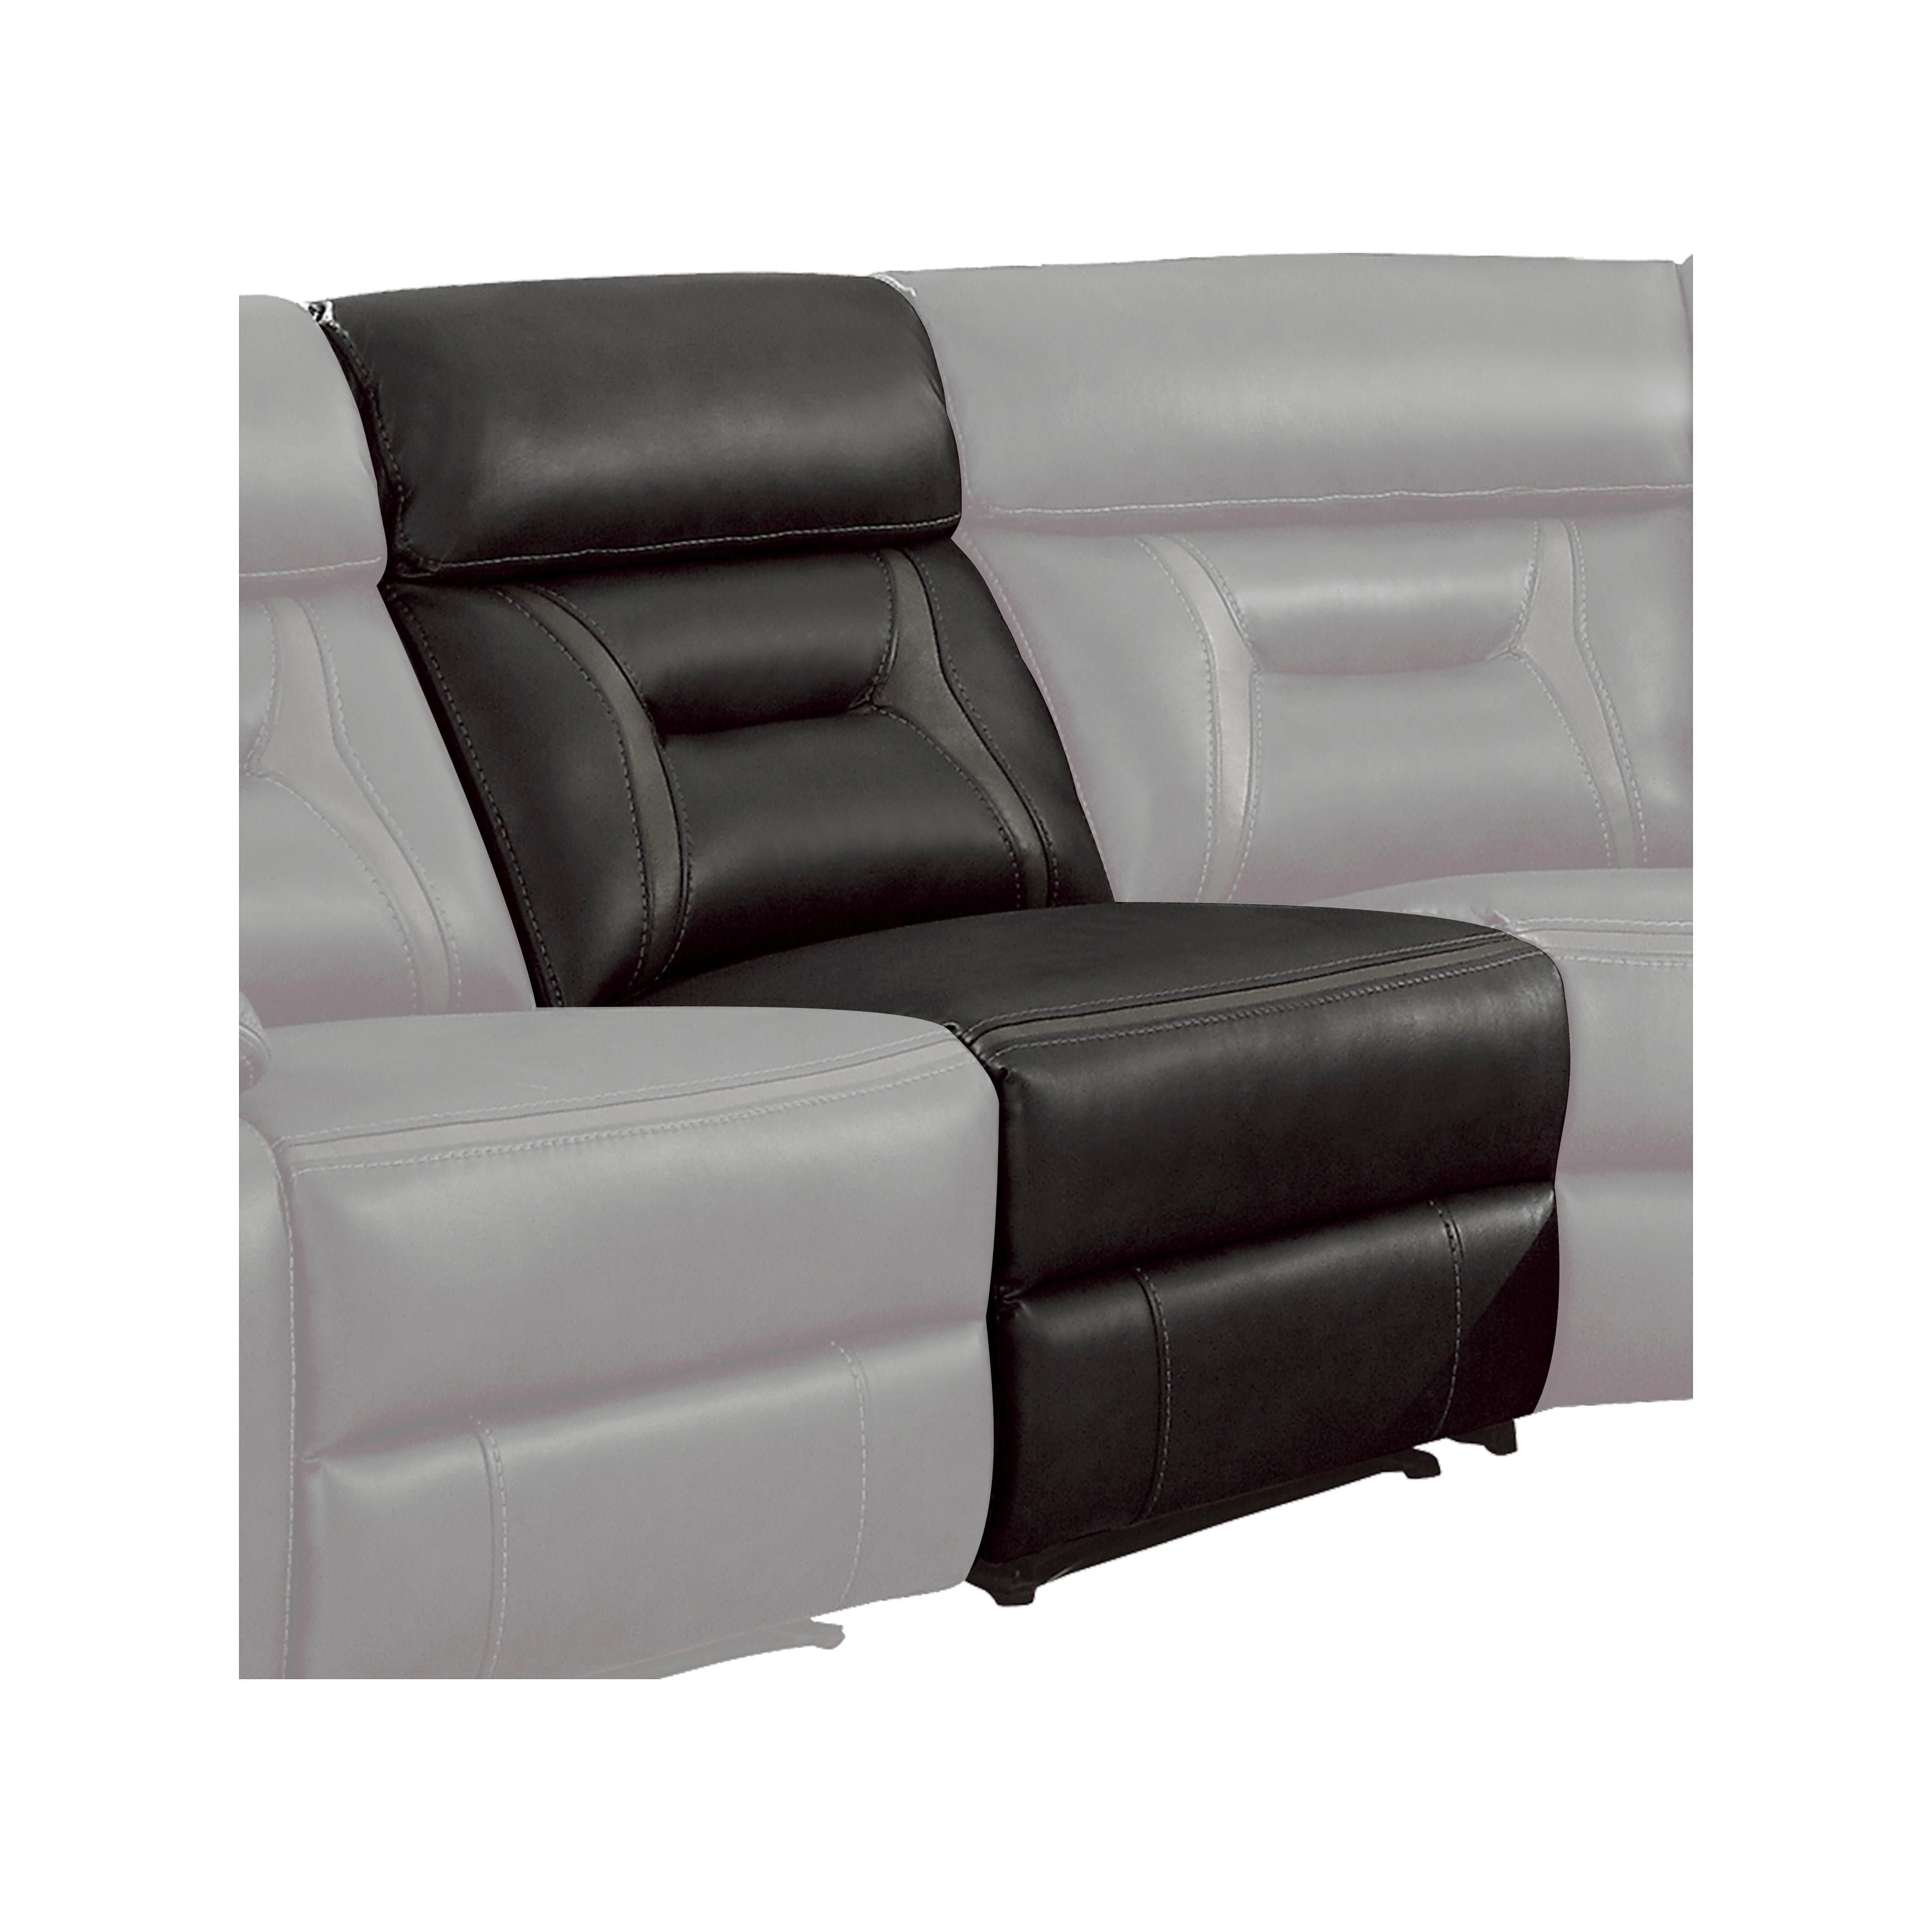 Modern Armless Chair 8229DG-AC Amite 8229DG-AC in Dark Gray Faux Leather